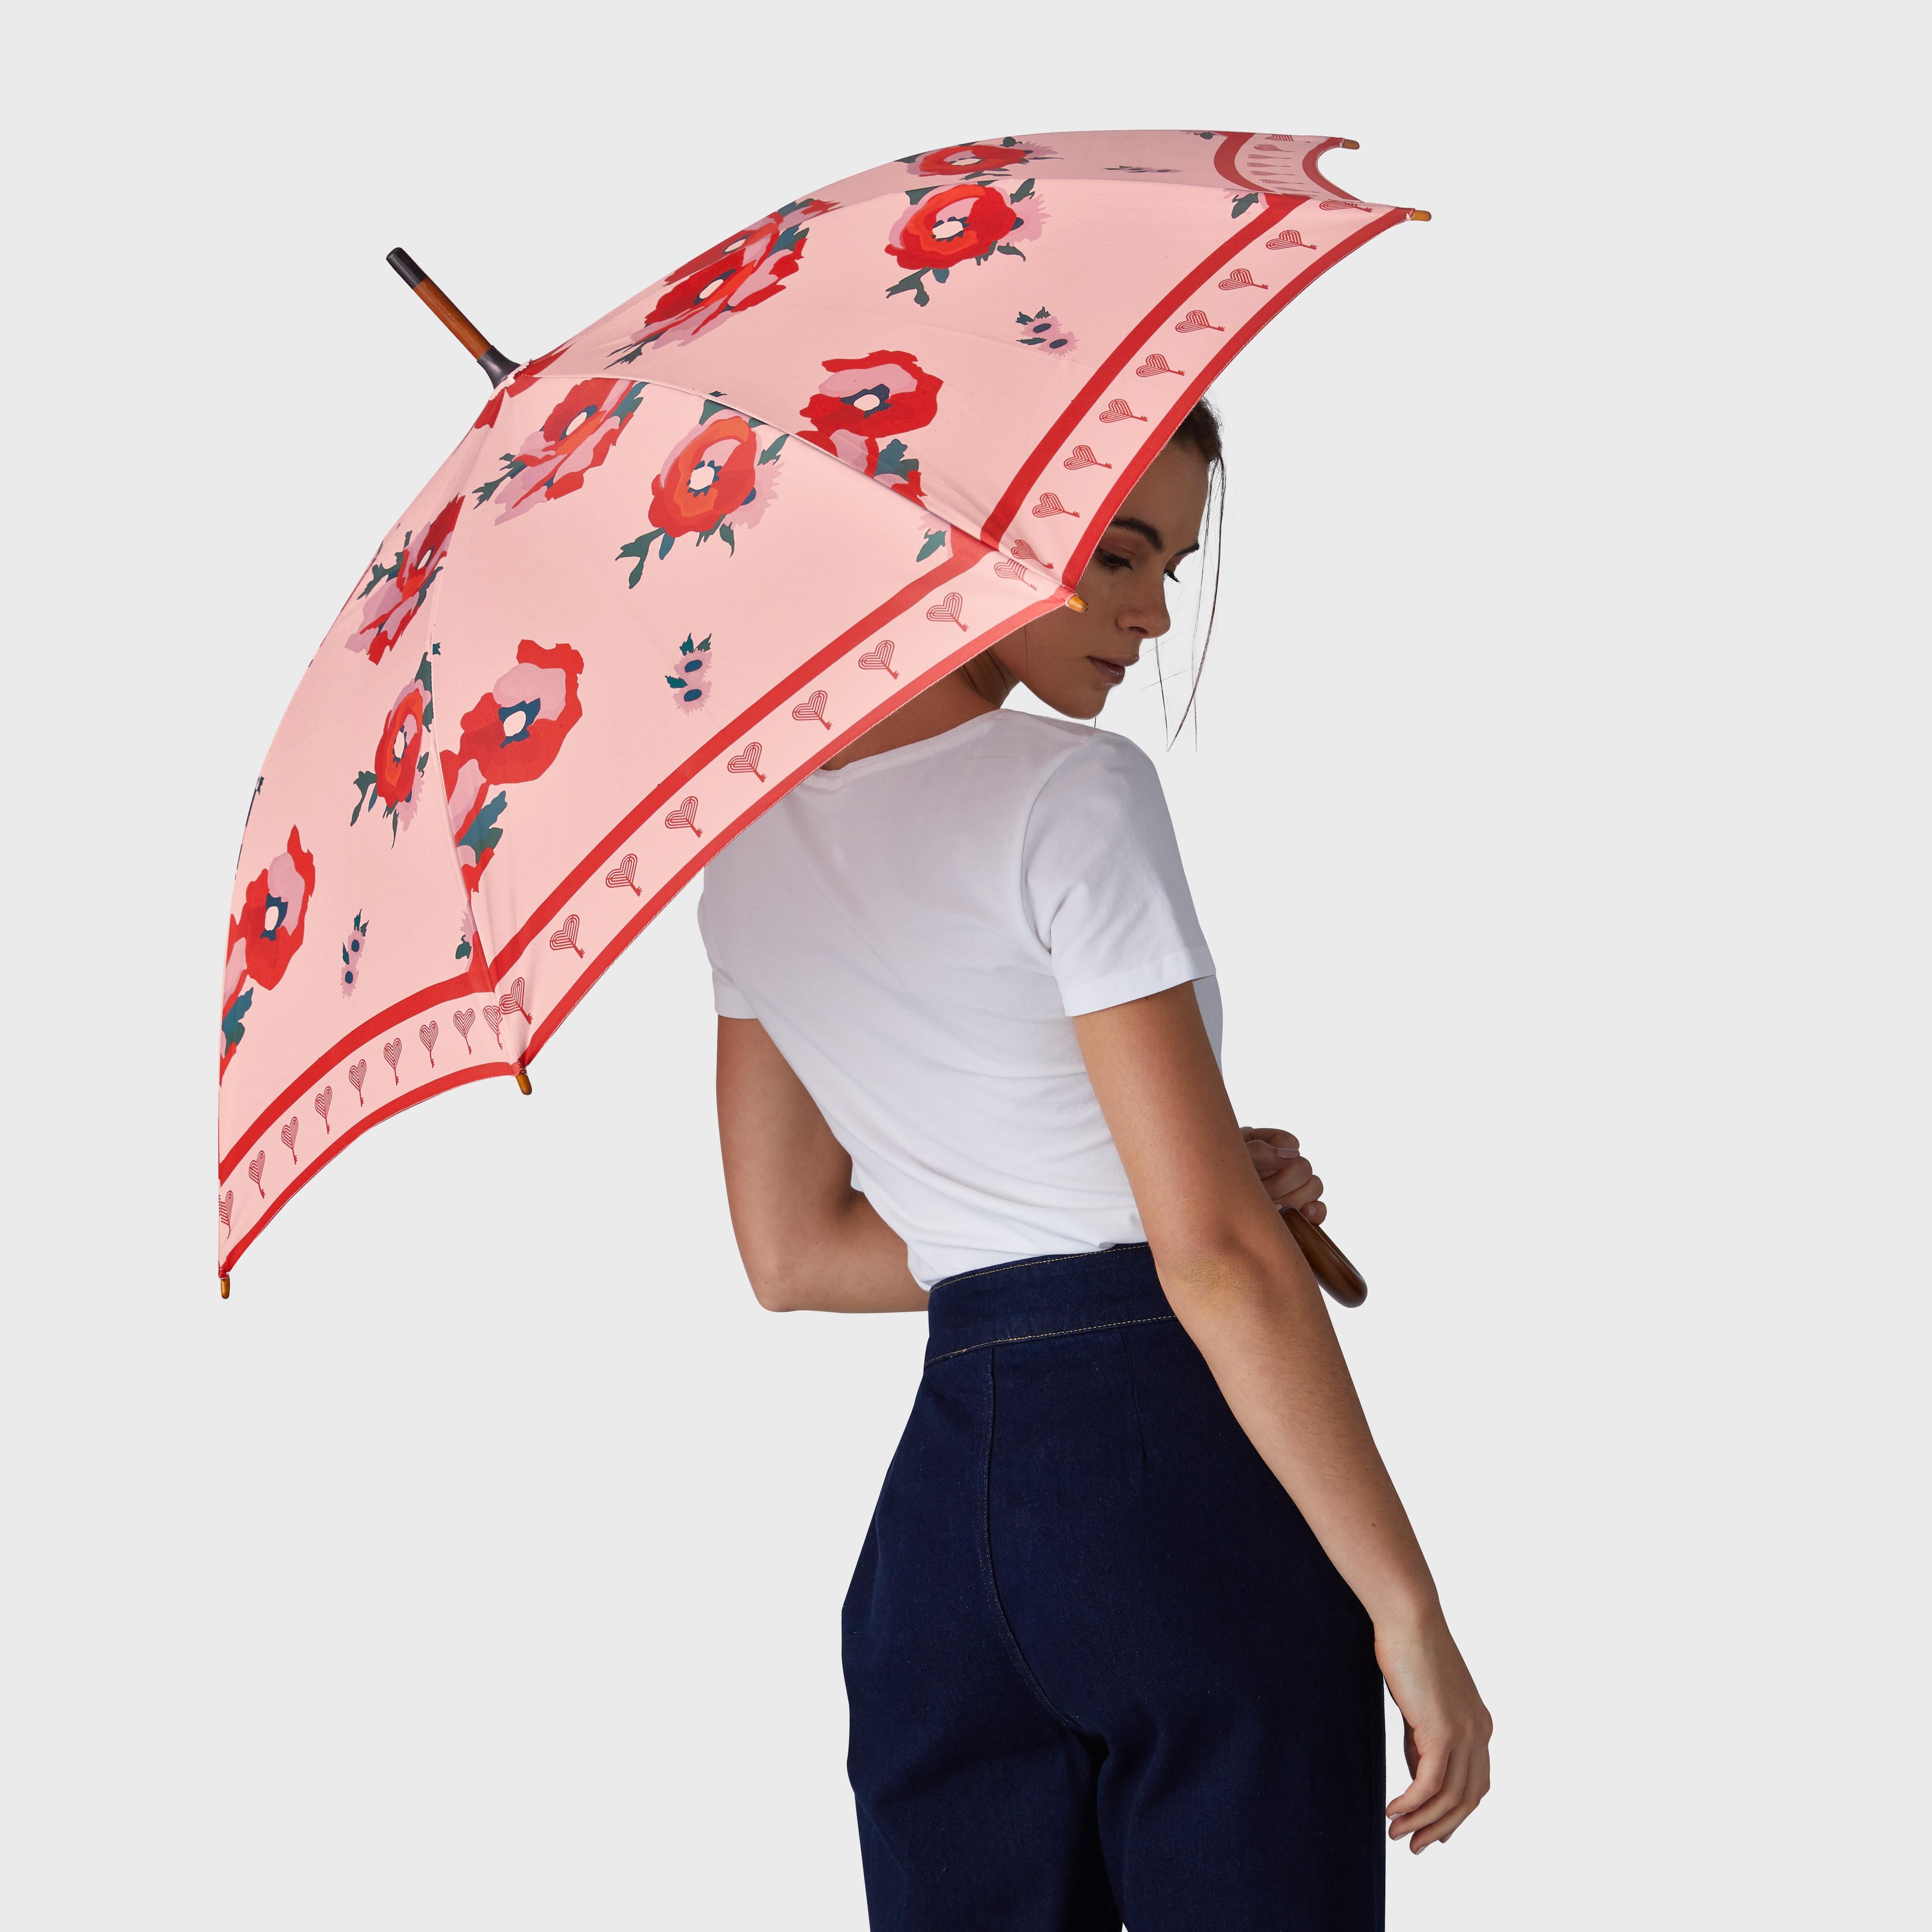 Blush Bloom Umbrella